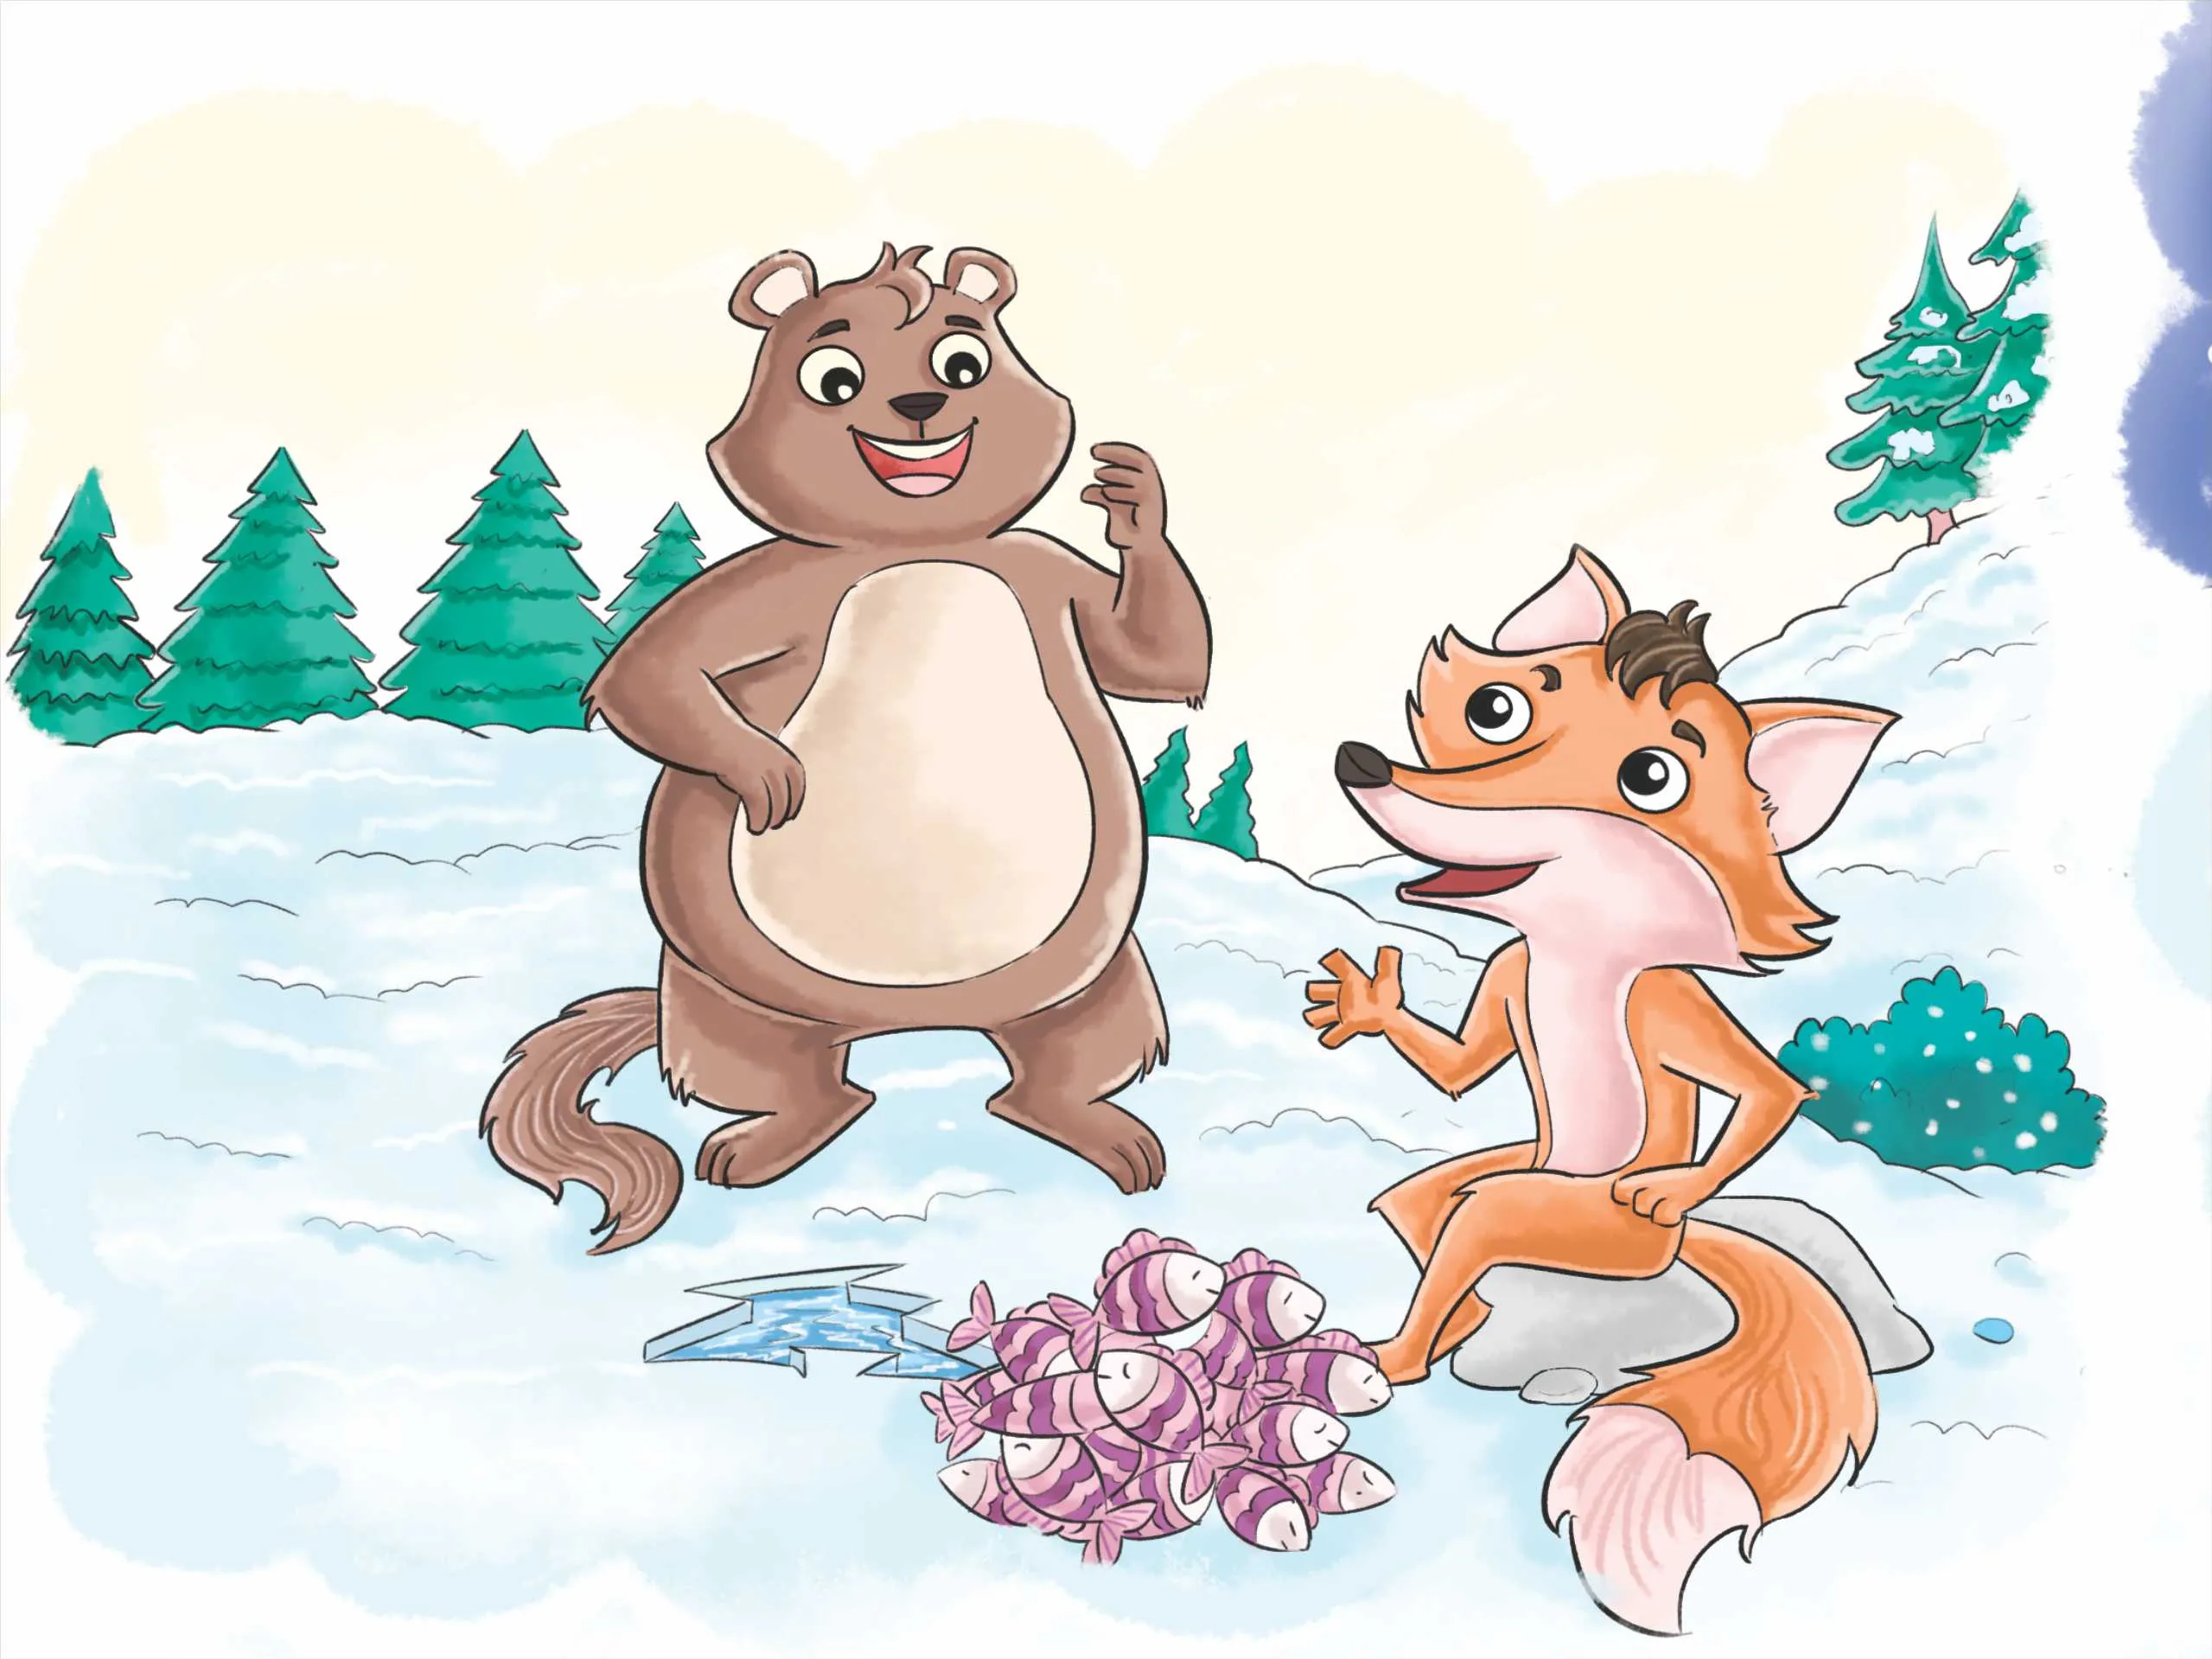 Cartoon image of a bear and fox